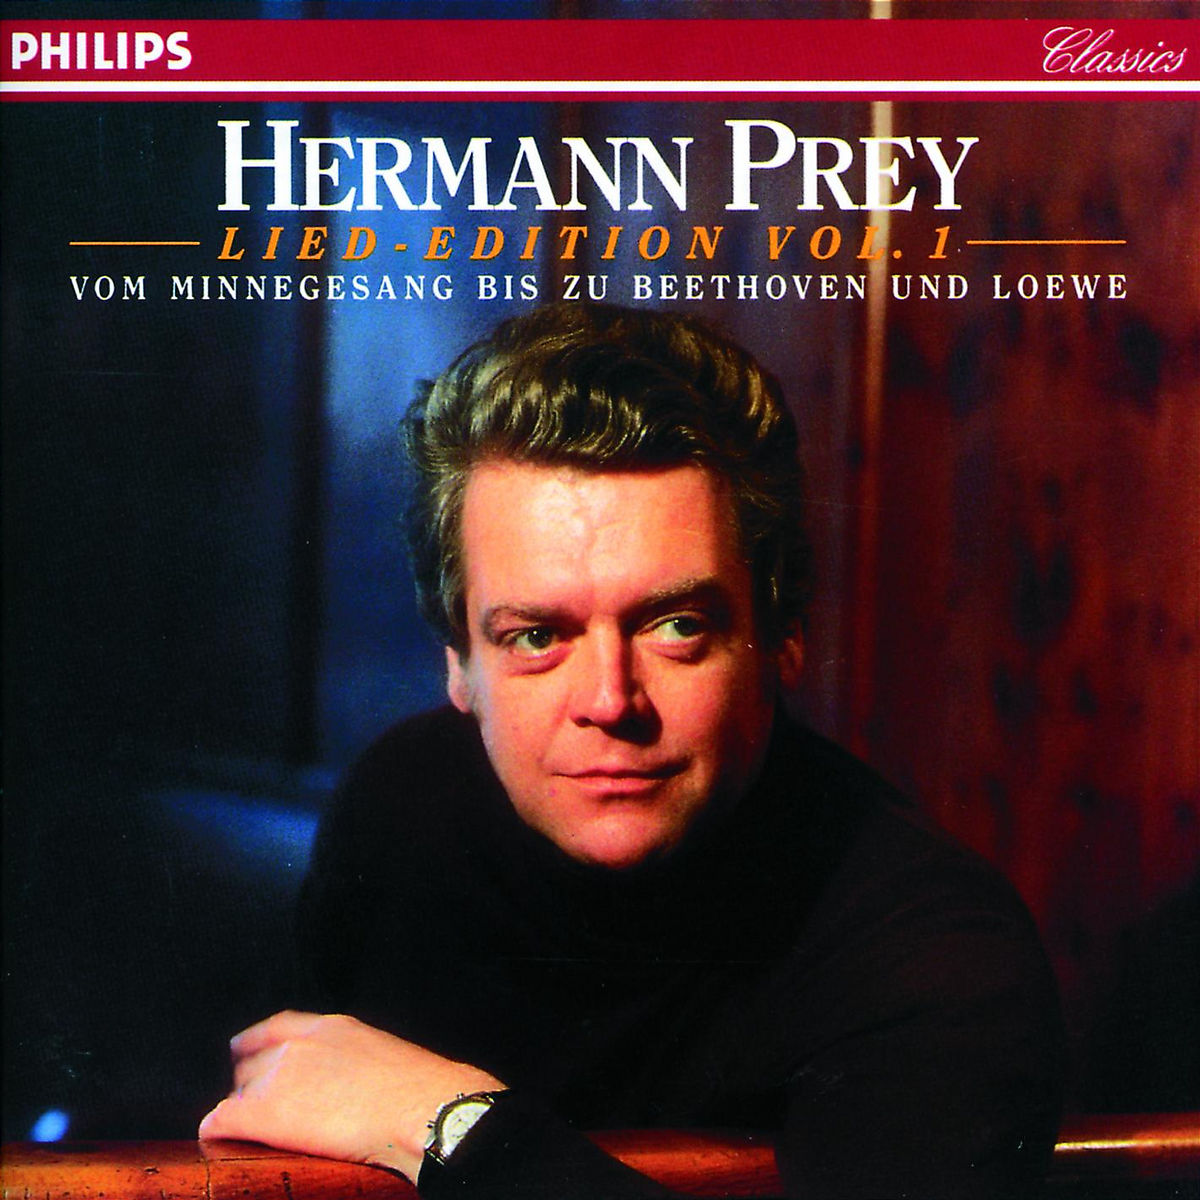 produktfamilie-hermann-prey-lied-edition-vol-1